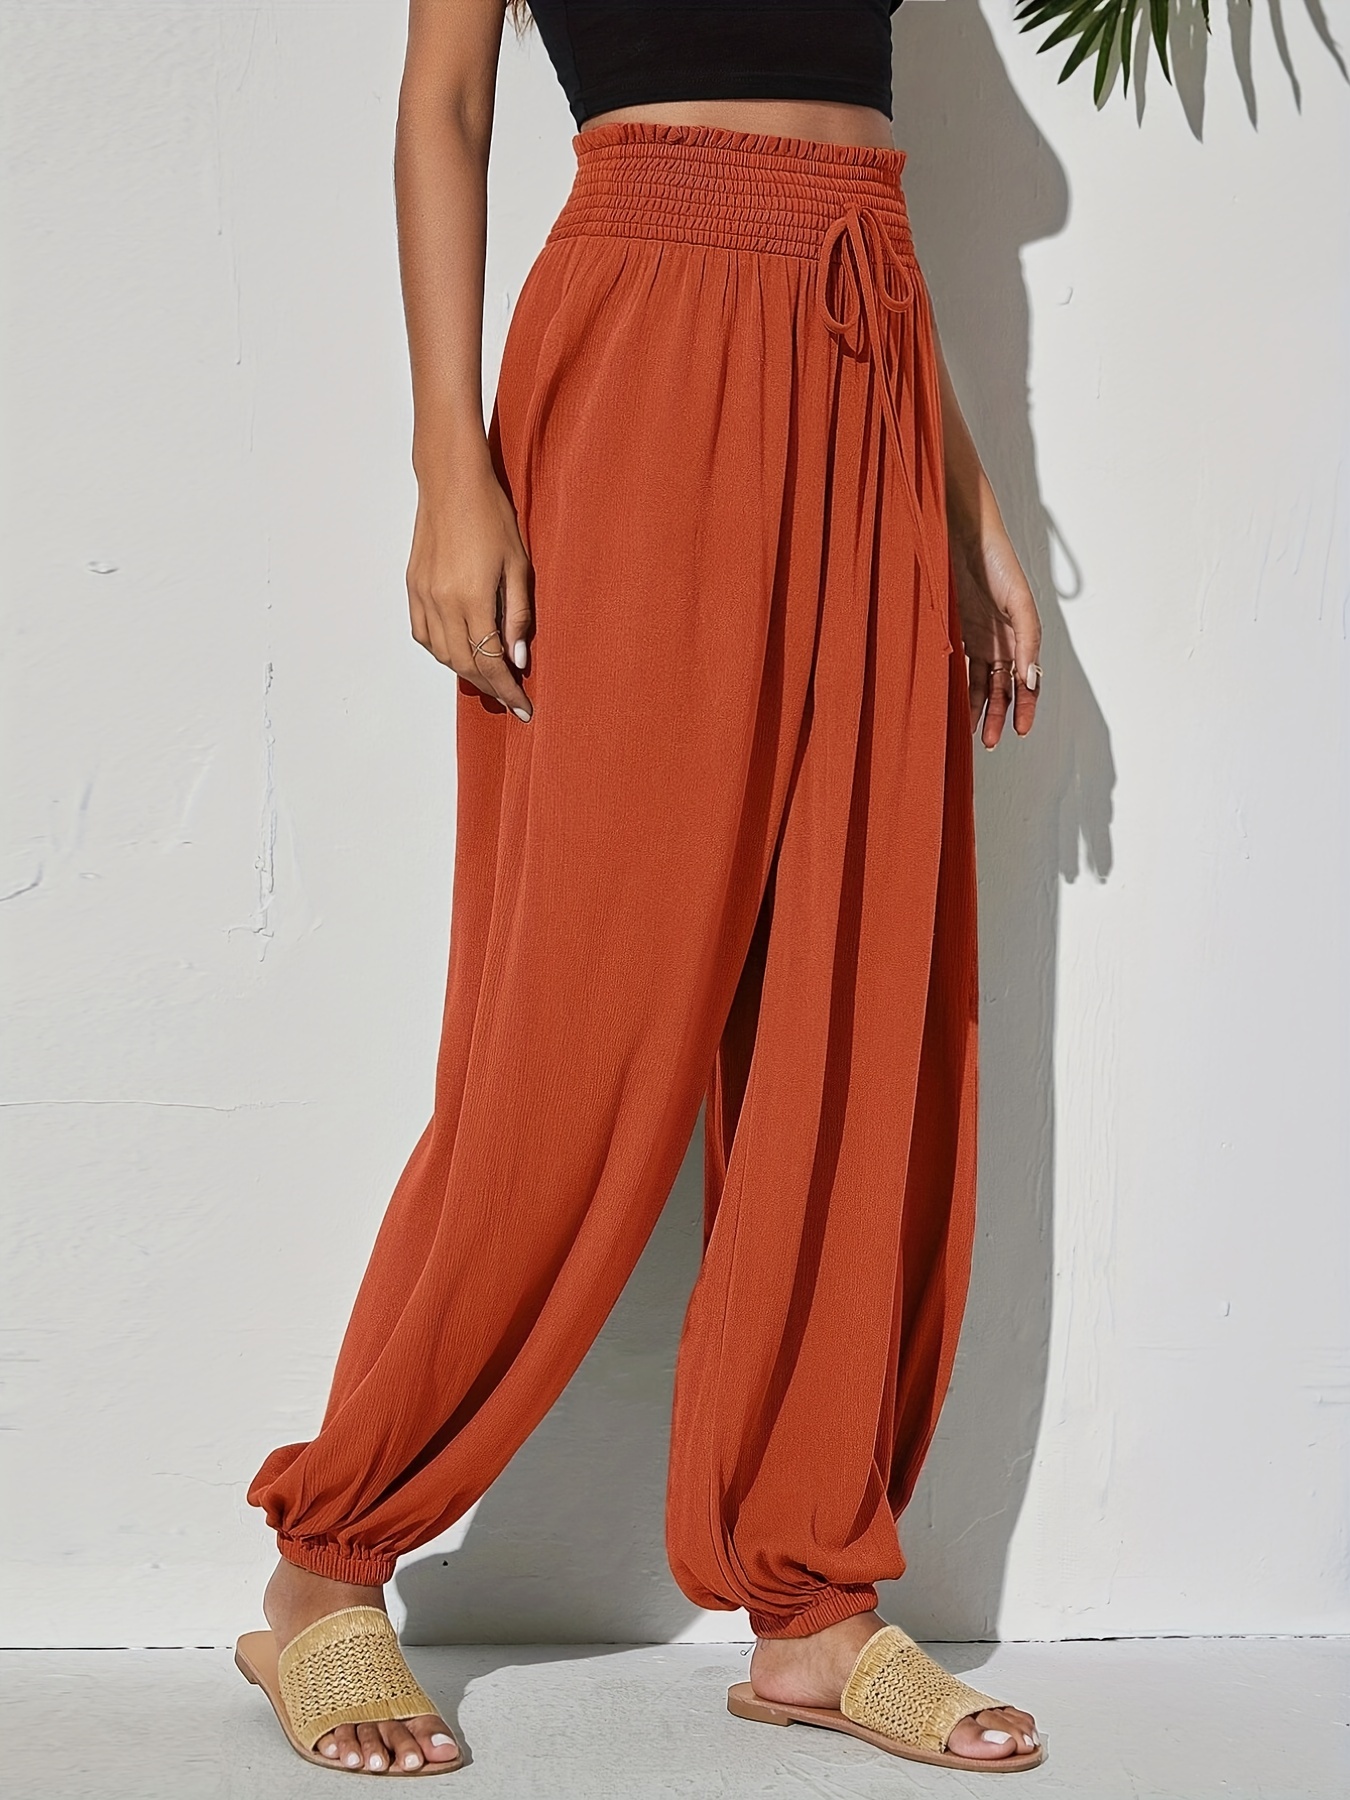 Orange 100% Silk Womens Pants Elastic Waist Drawstring Style